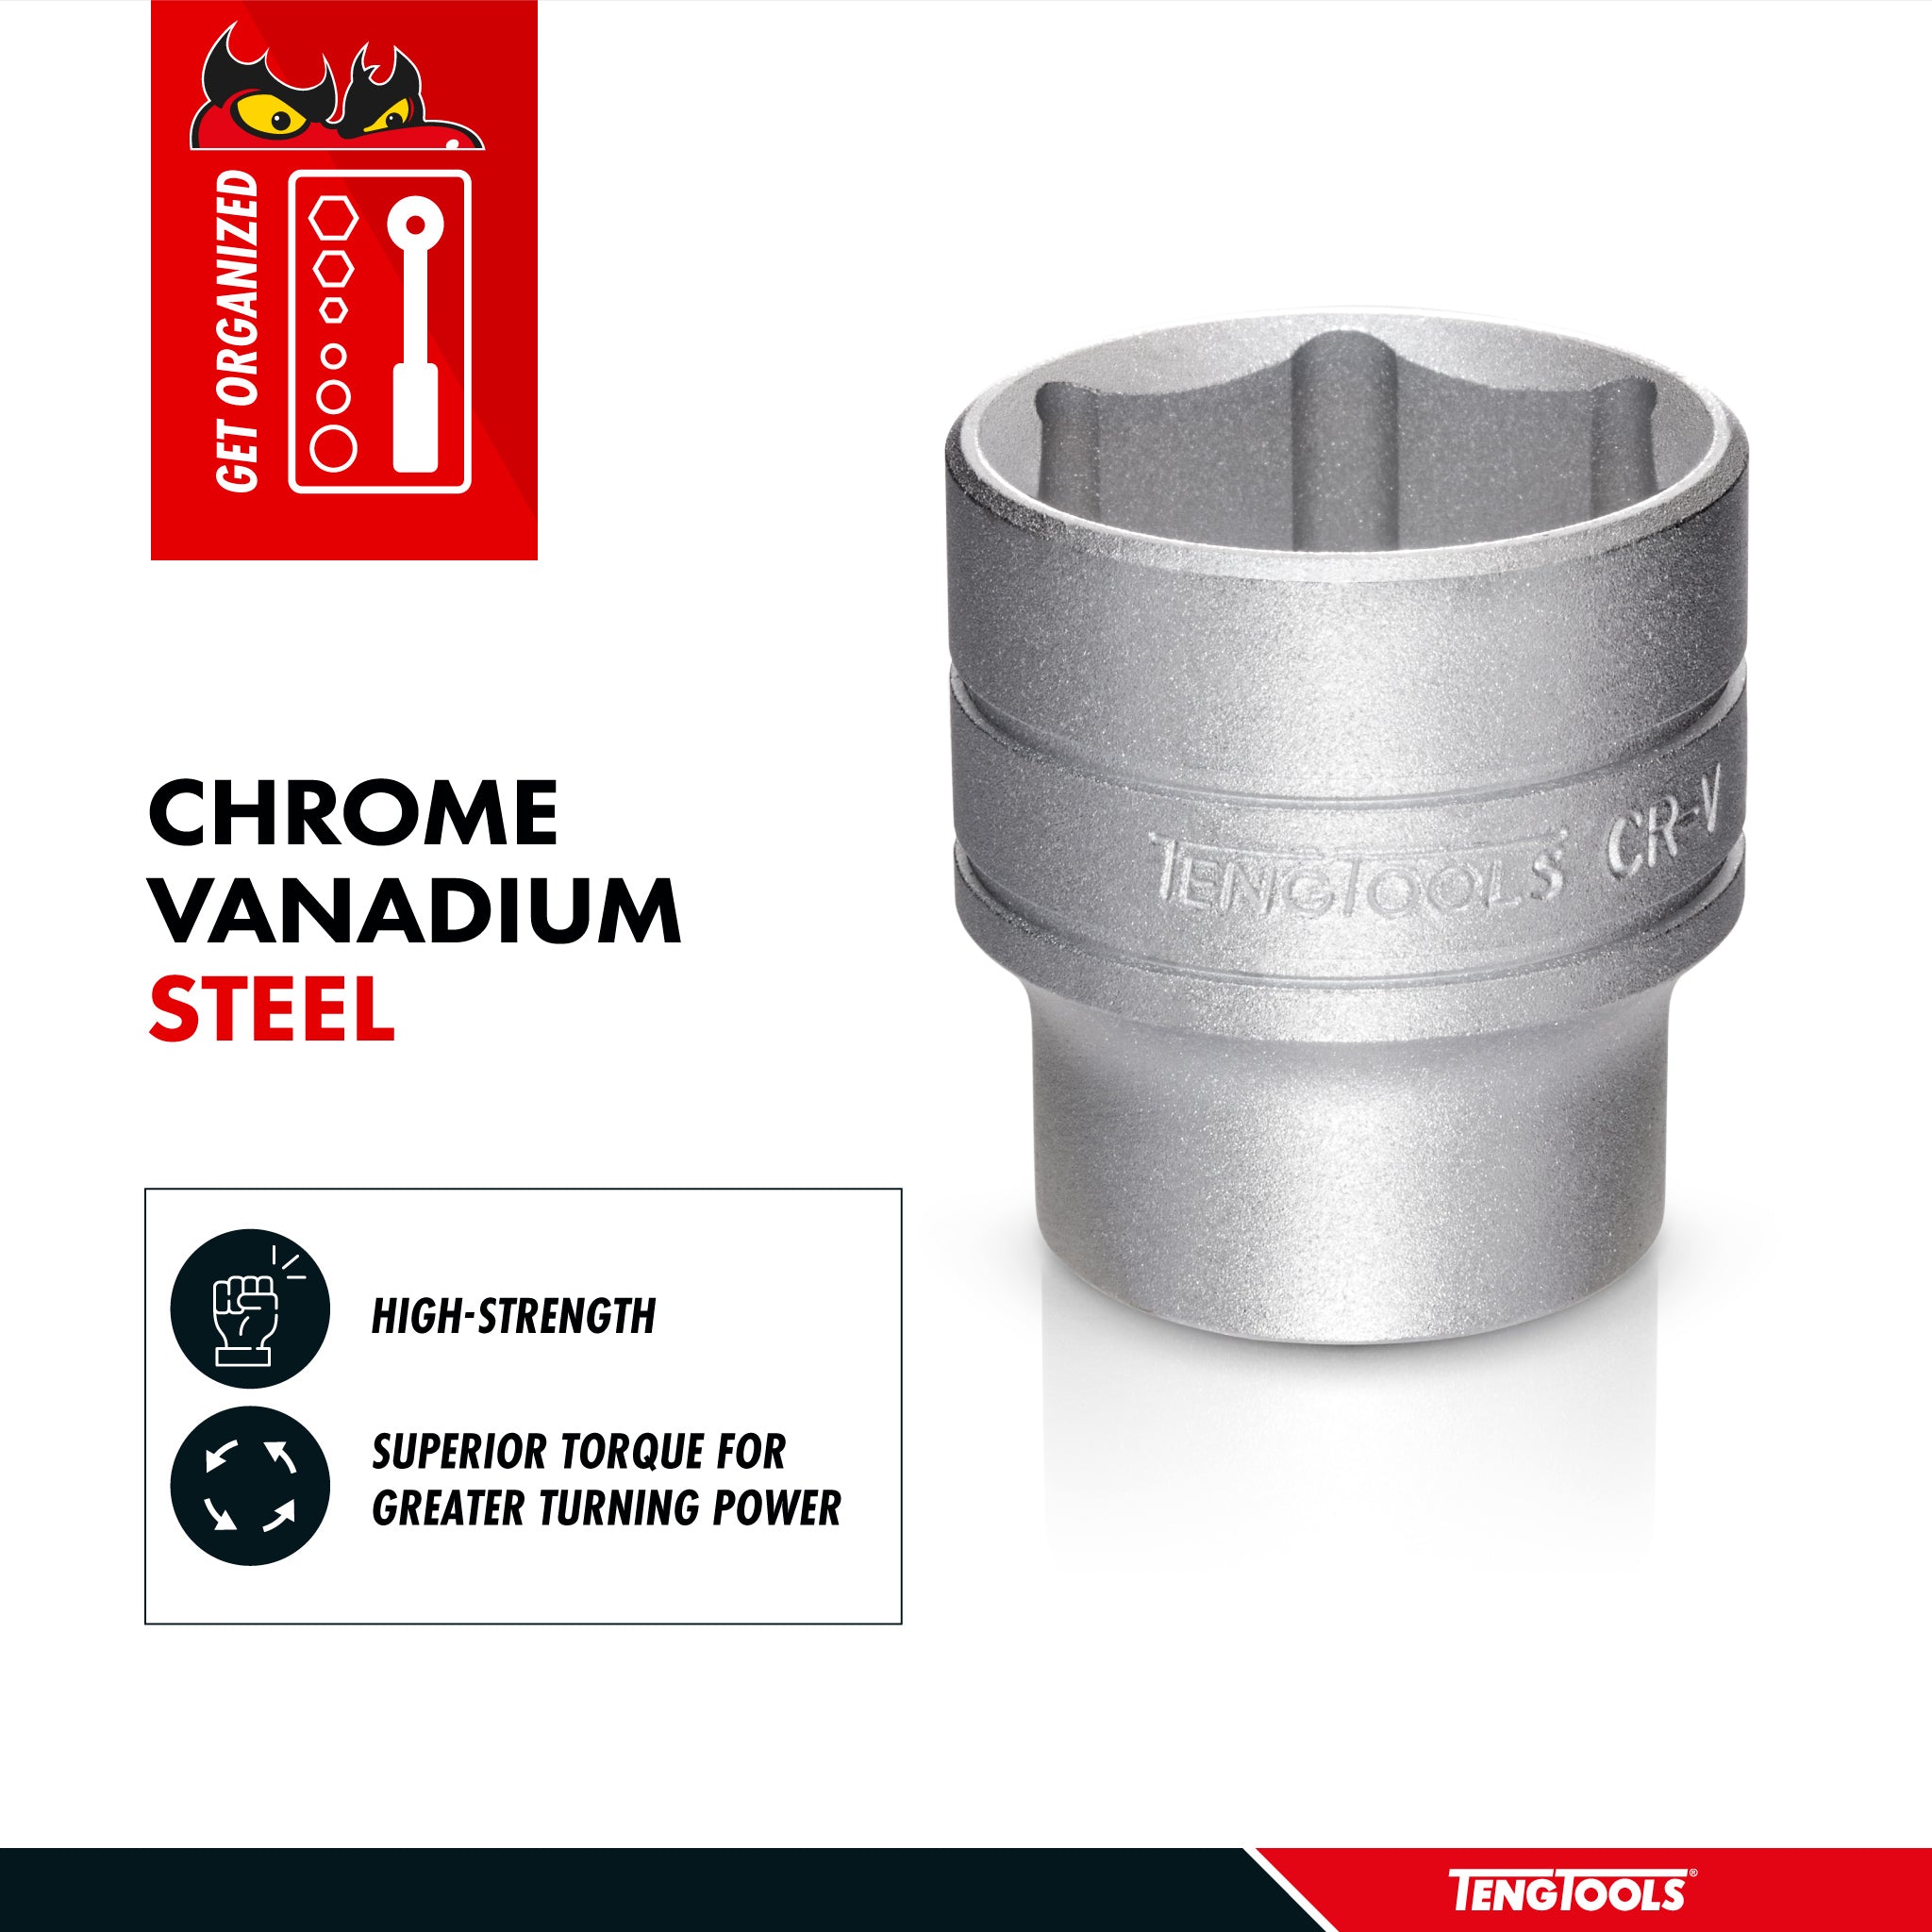 Teng Tools 3/8 Inch Drive 6 Point Metric Shallow Chrome Vanadium Sockets